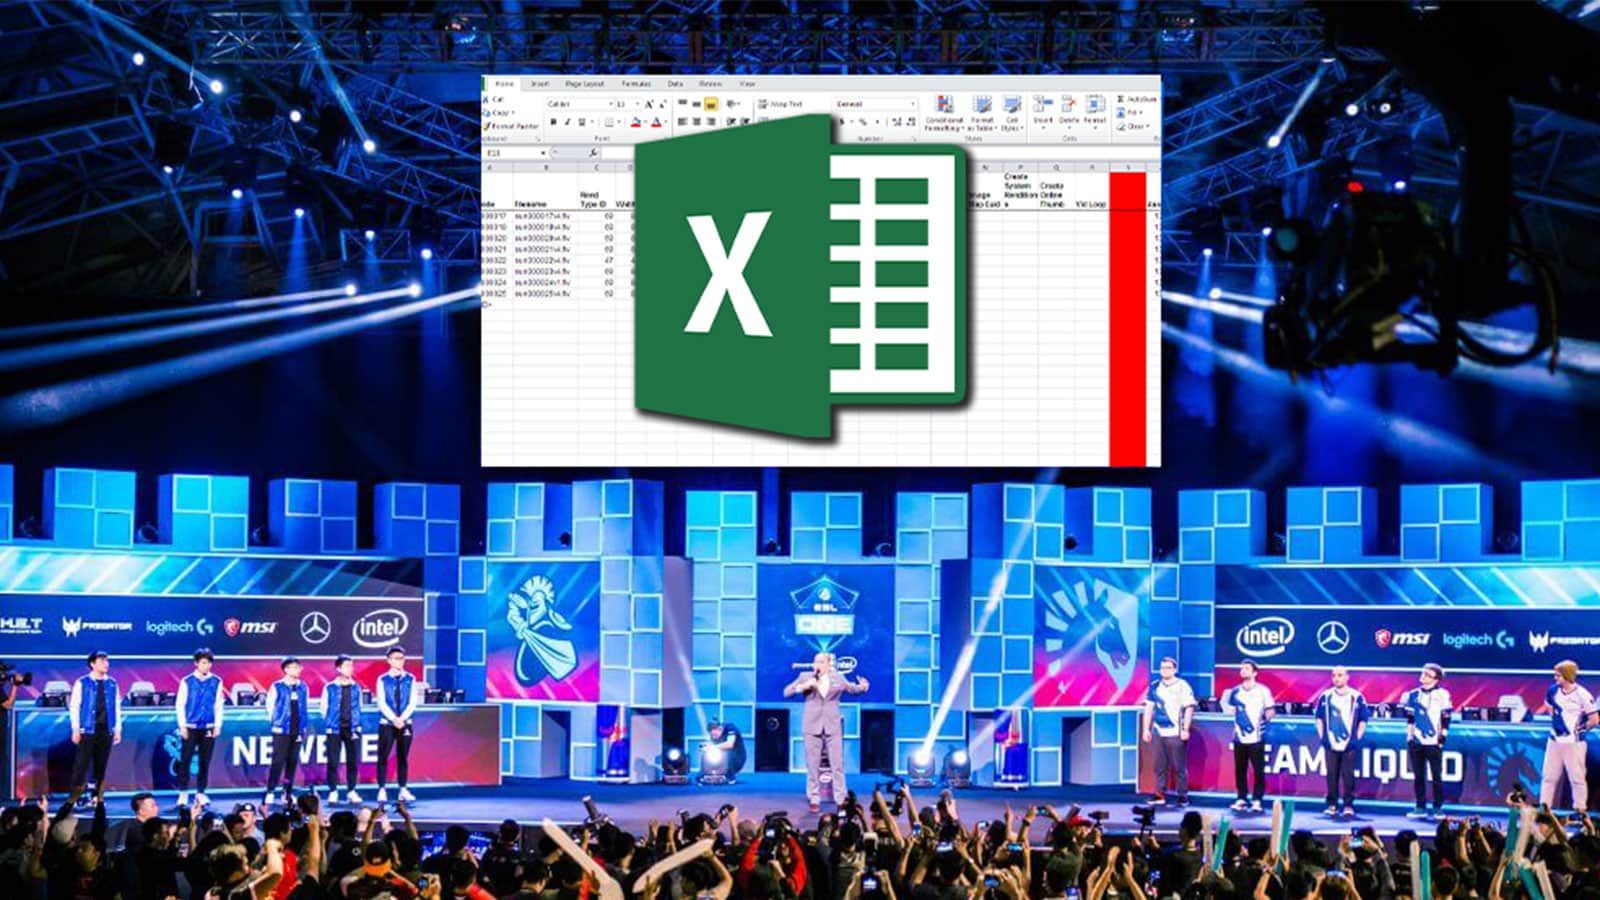 Yee Akhirnya Turnamen eSports untuk Excel Kembali Hadir